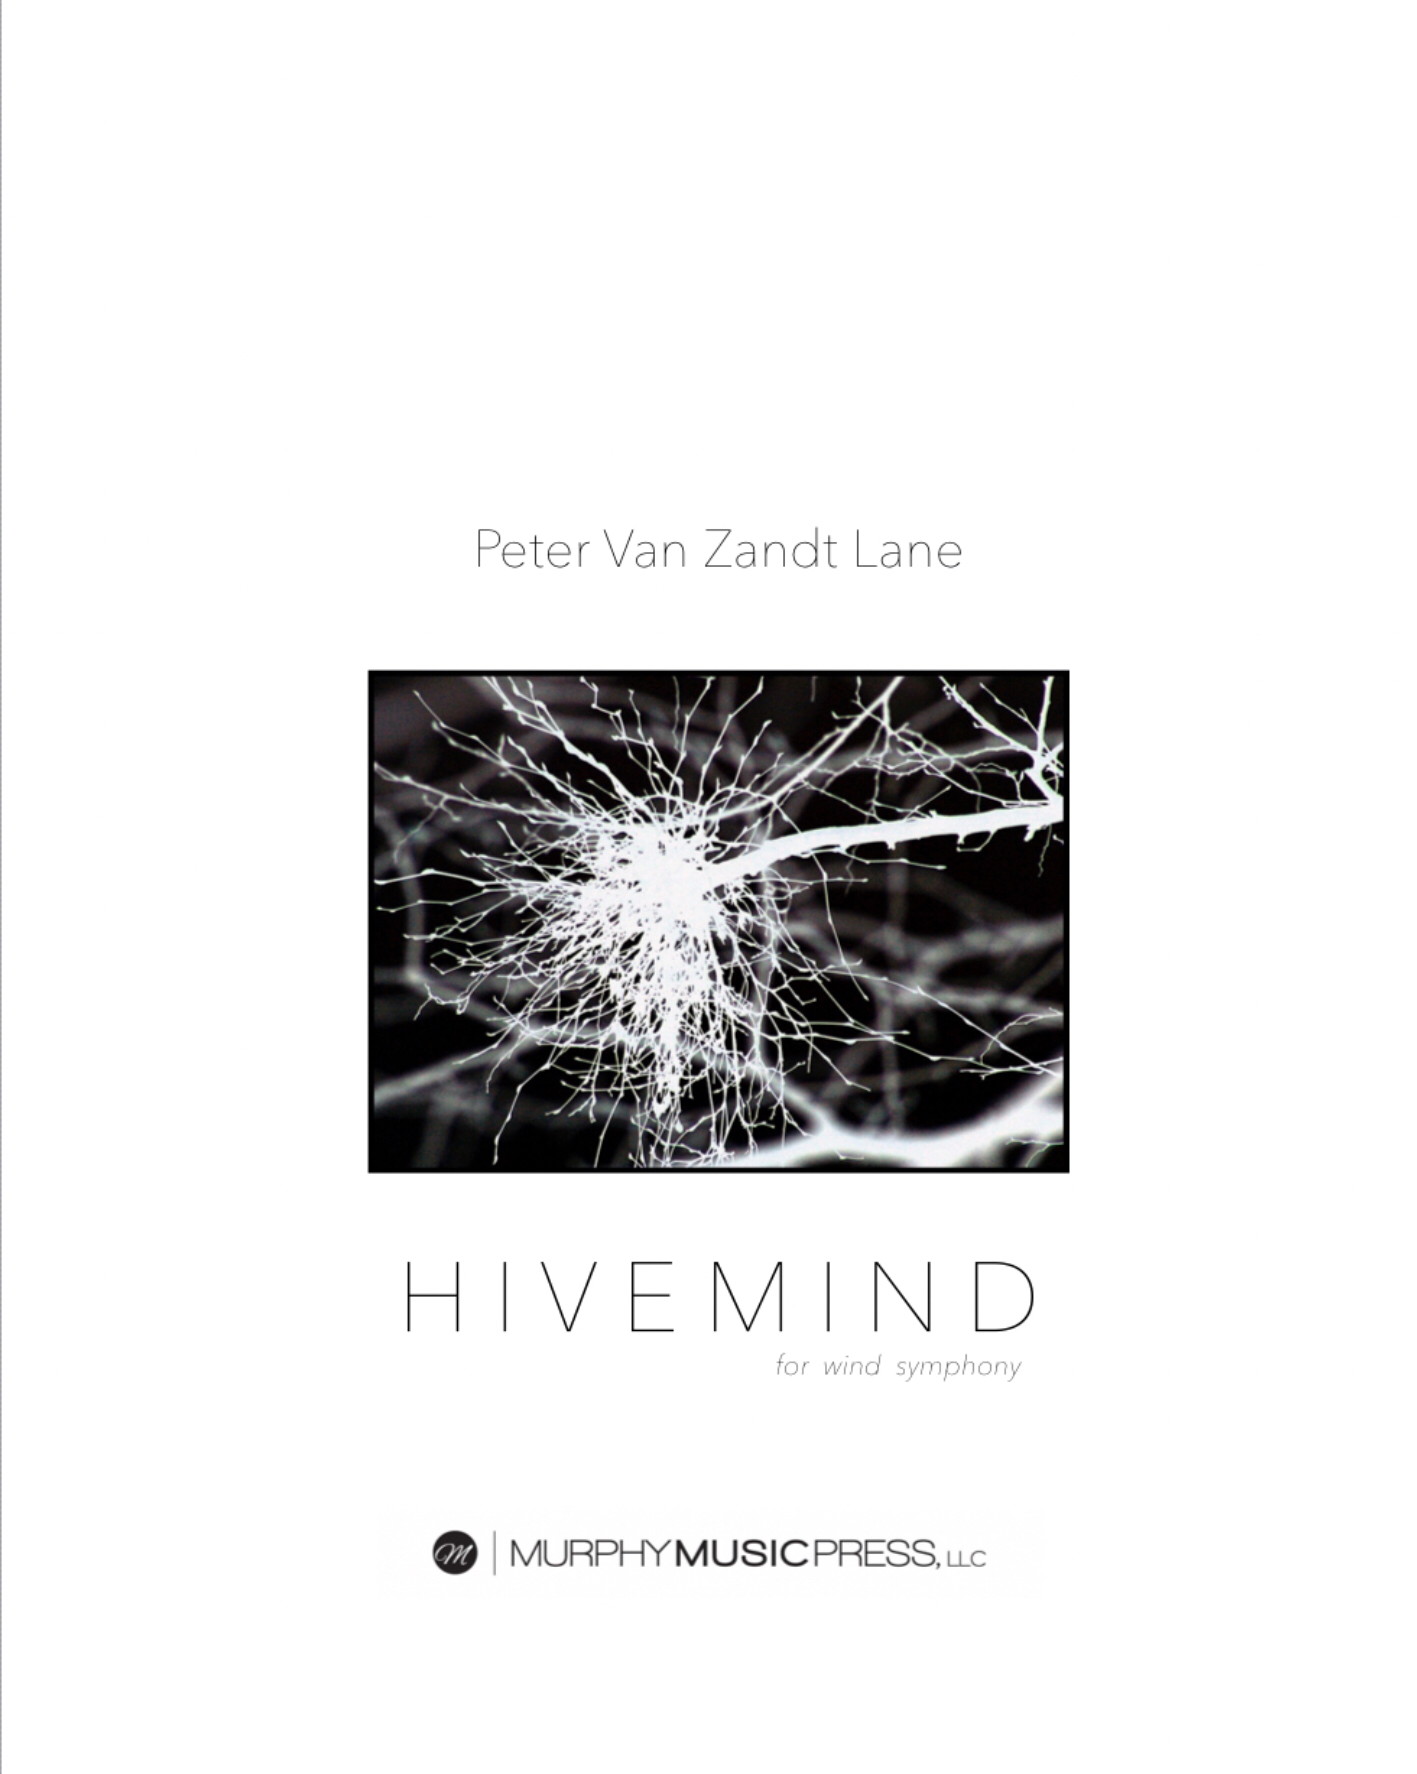 Hivemind  by Peter Van Zandt Lane